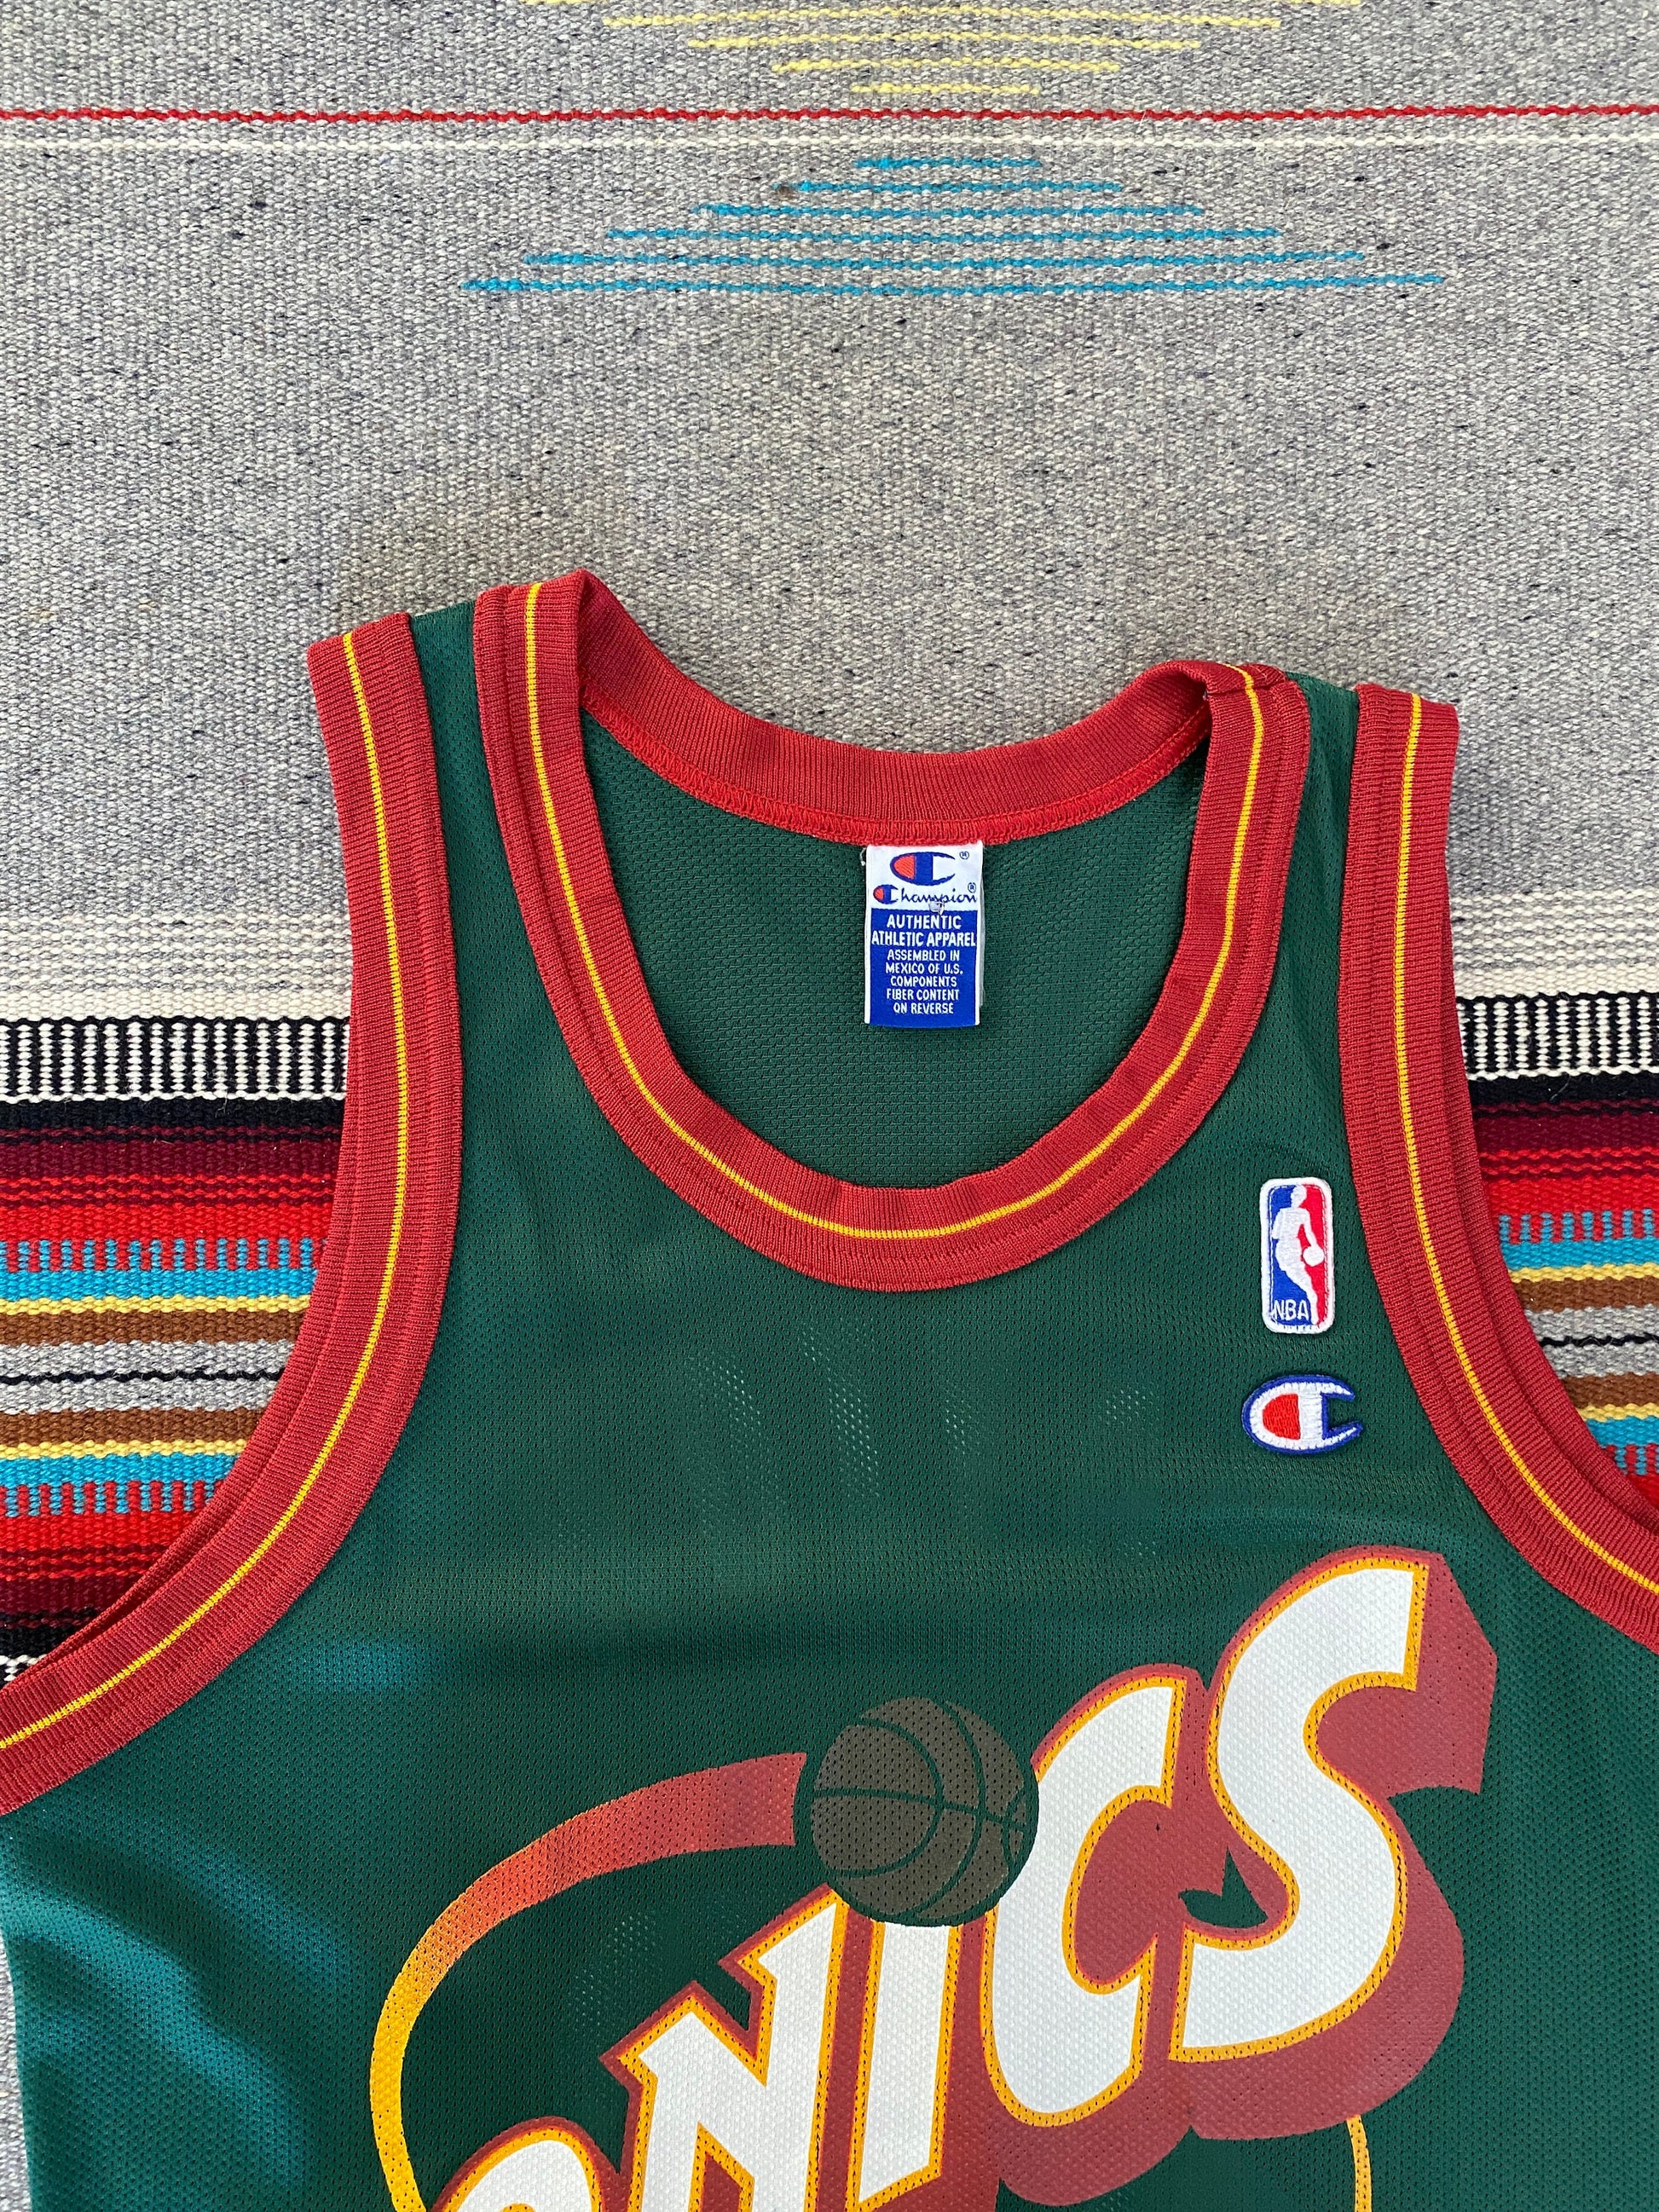 90s Vintage NBA Jersey, Sonics Kemp #40 Champion Jersey, Size 48, Authentic NBA Jersey, Sports Memorabilia, Basketball Apparel